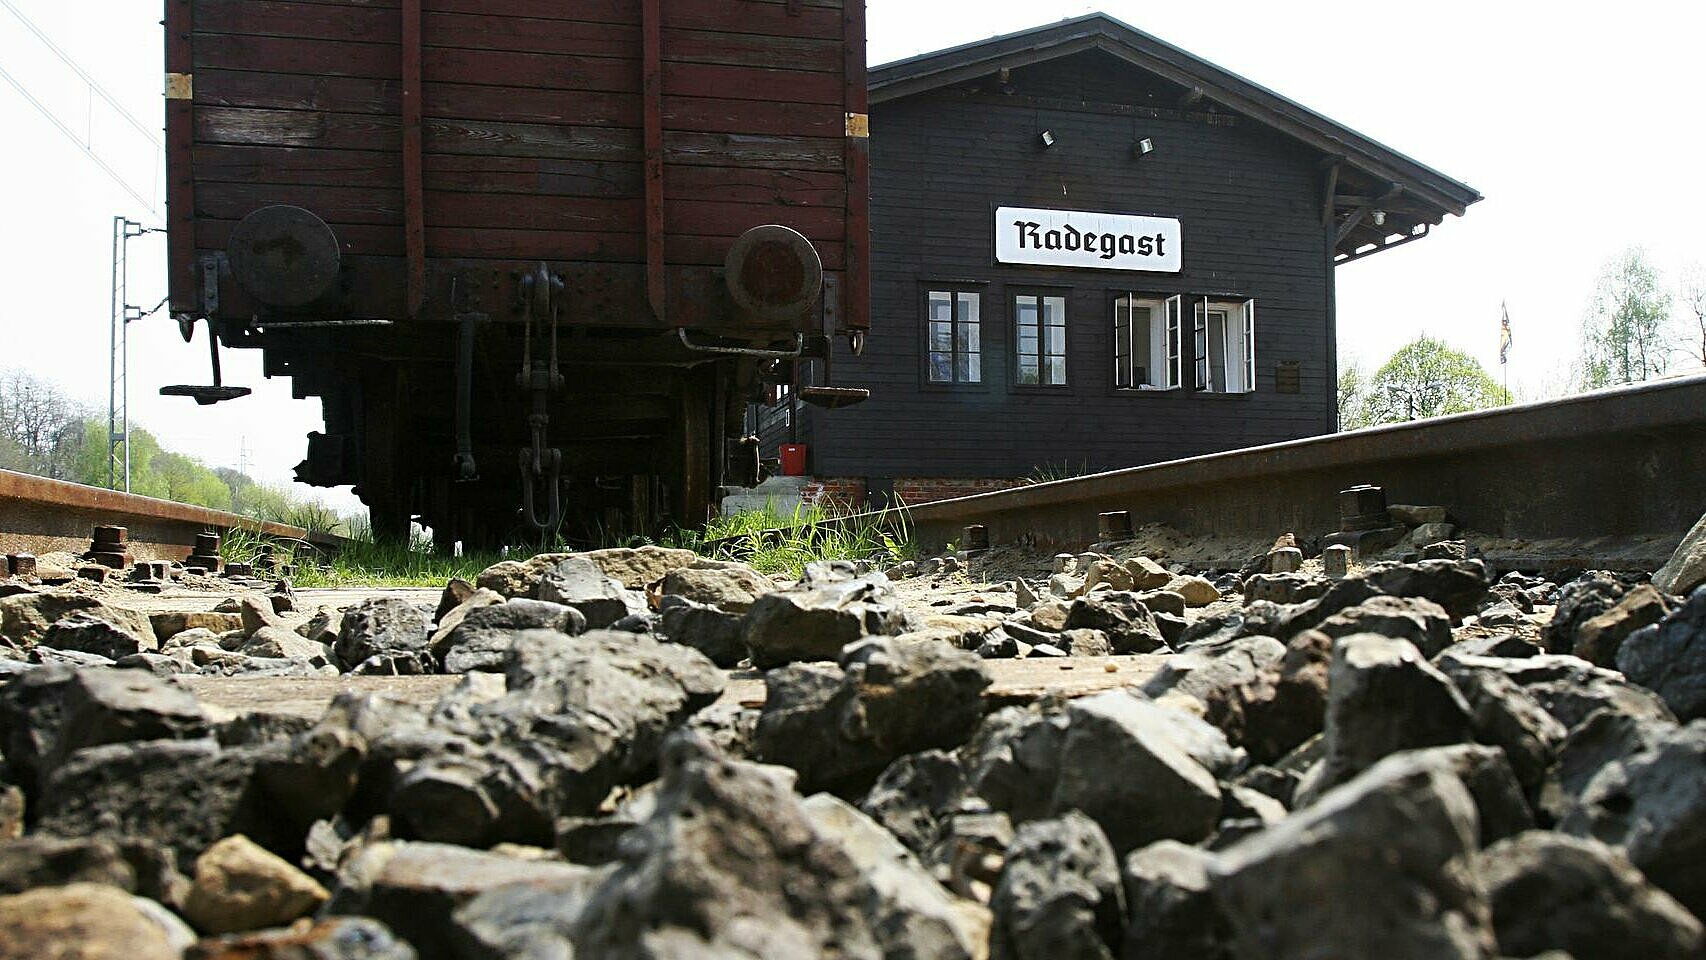 Bahnhof Radegast , fot. A. Wach